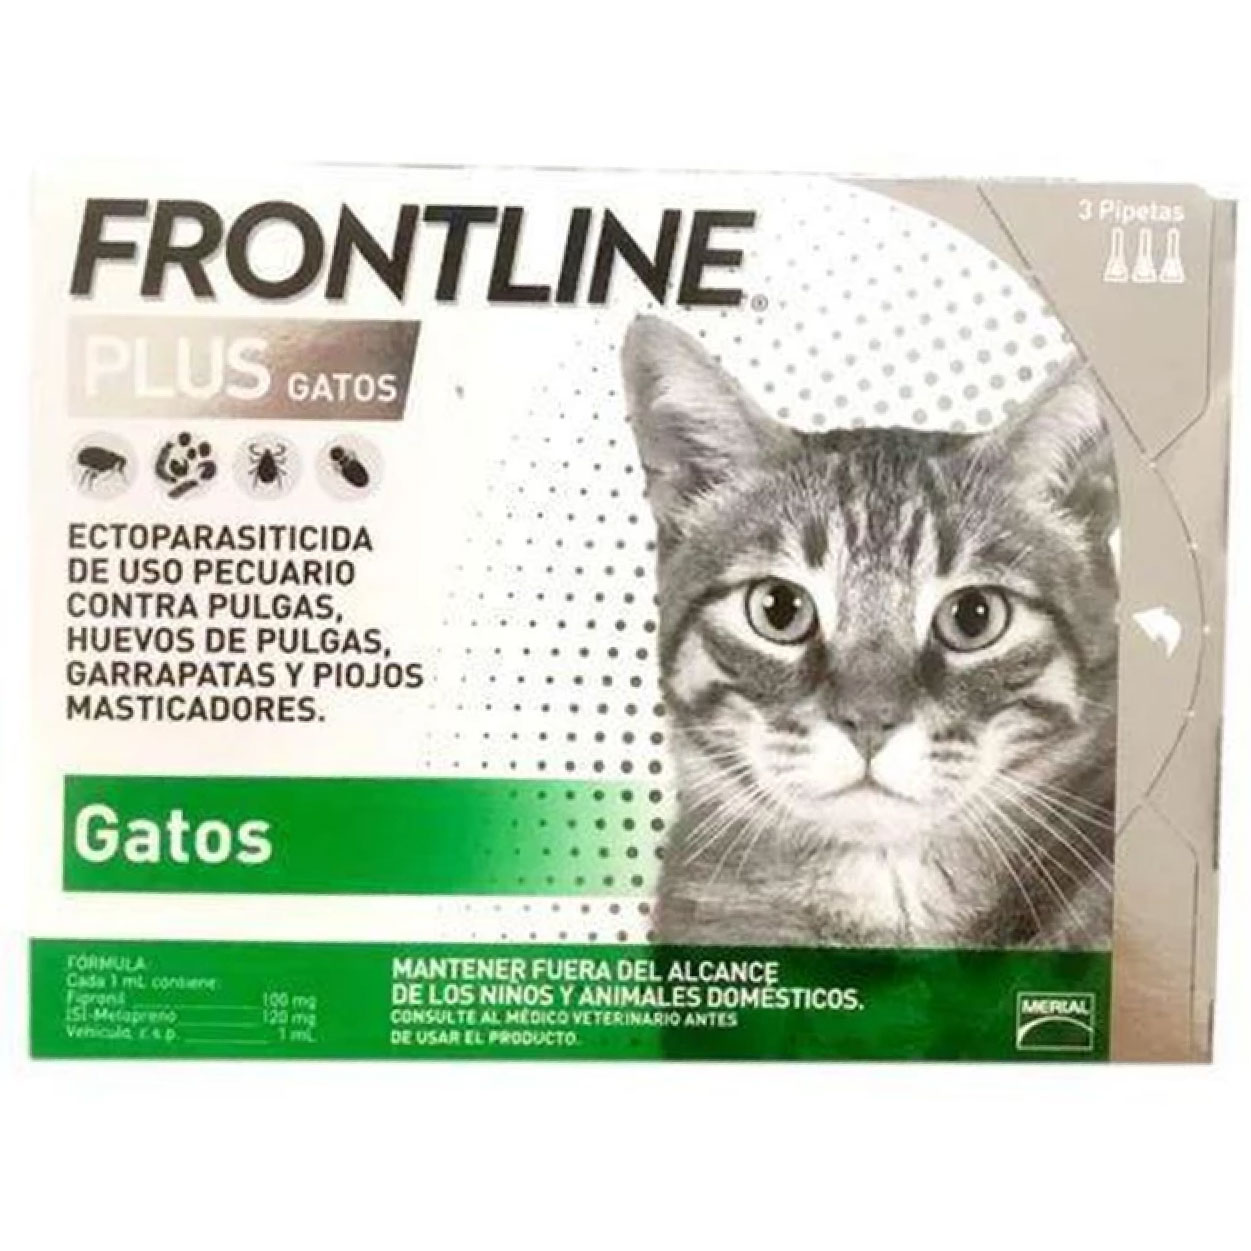 frontline plus gatos merial ecoparasiticida contra pulgas 